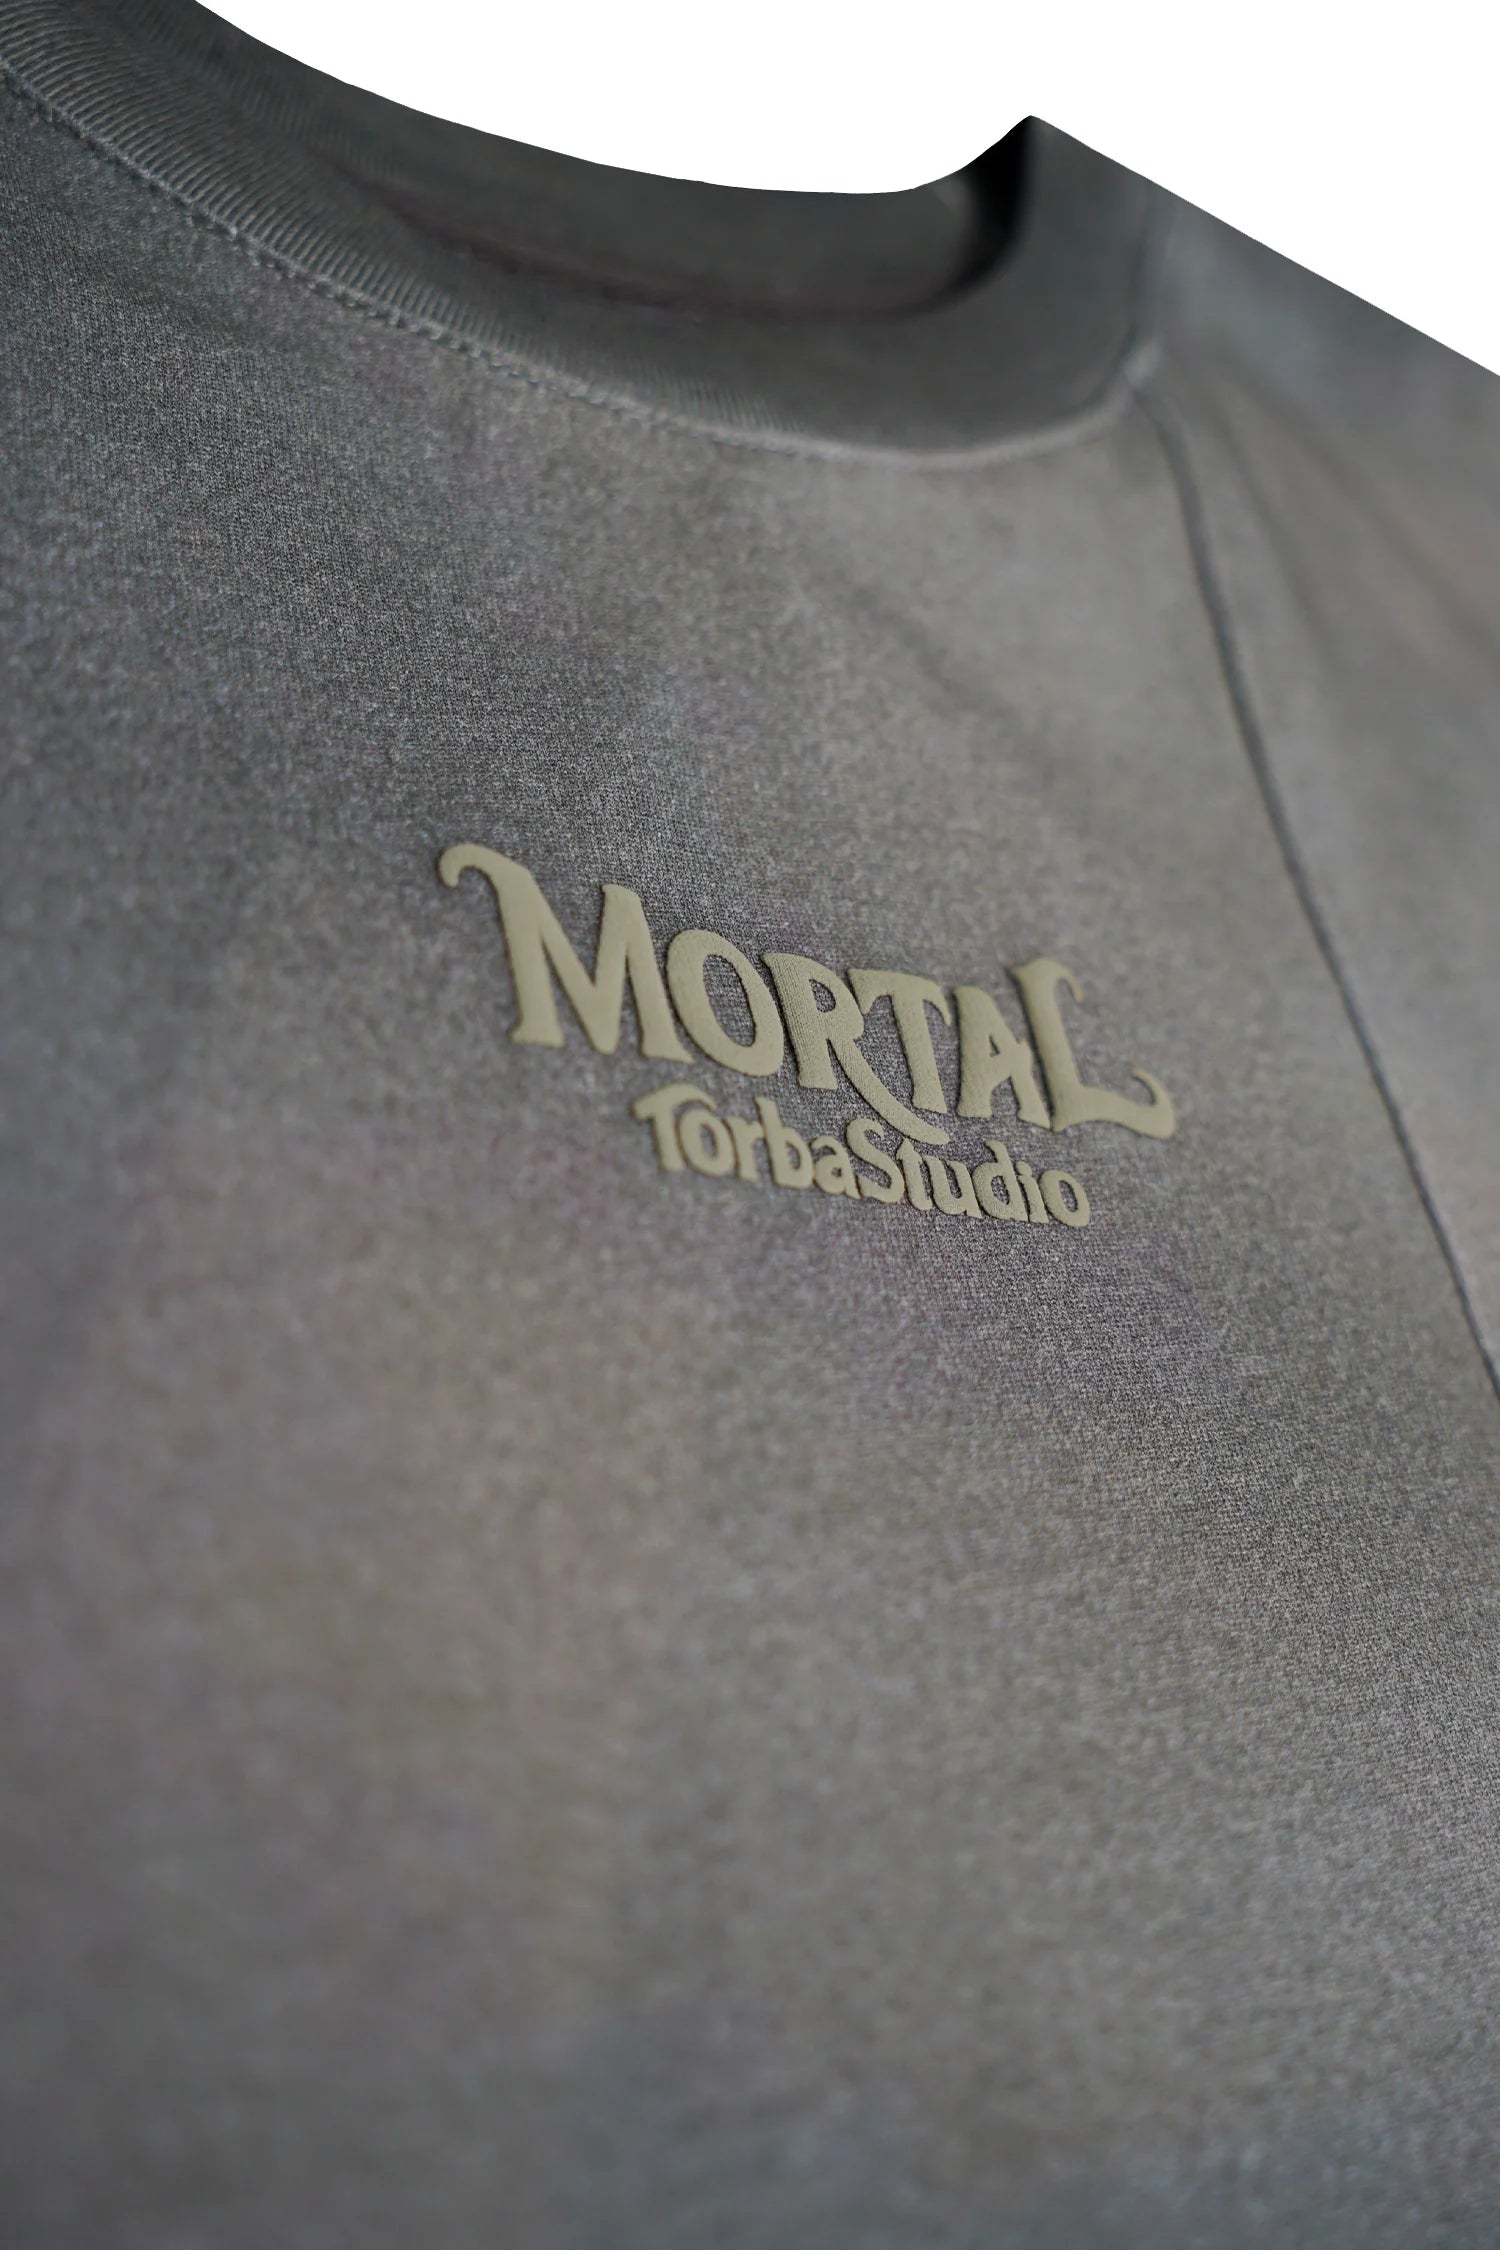 TorbaStudio Mortal T-shirt